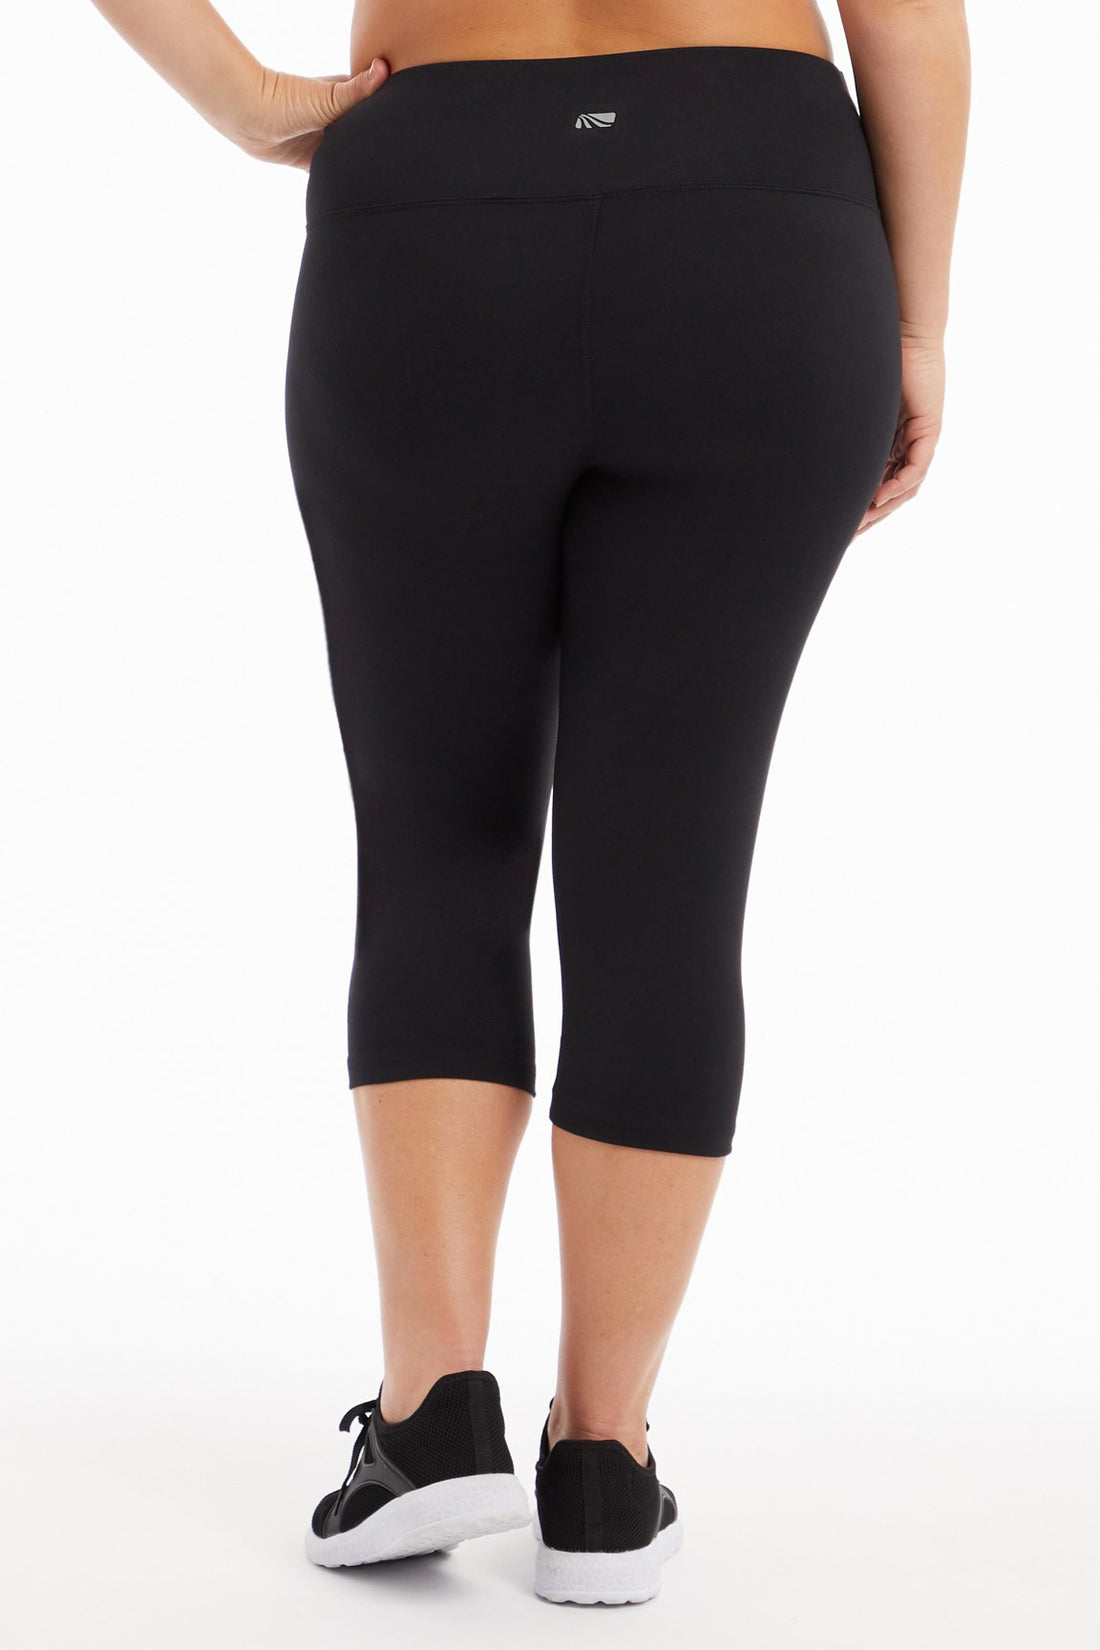 Marika Solid Black Active Pants Size 1X (Plus) - 58% off